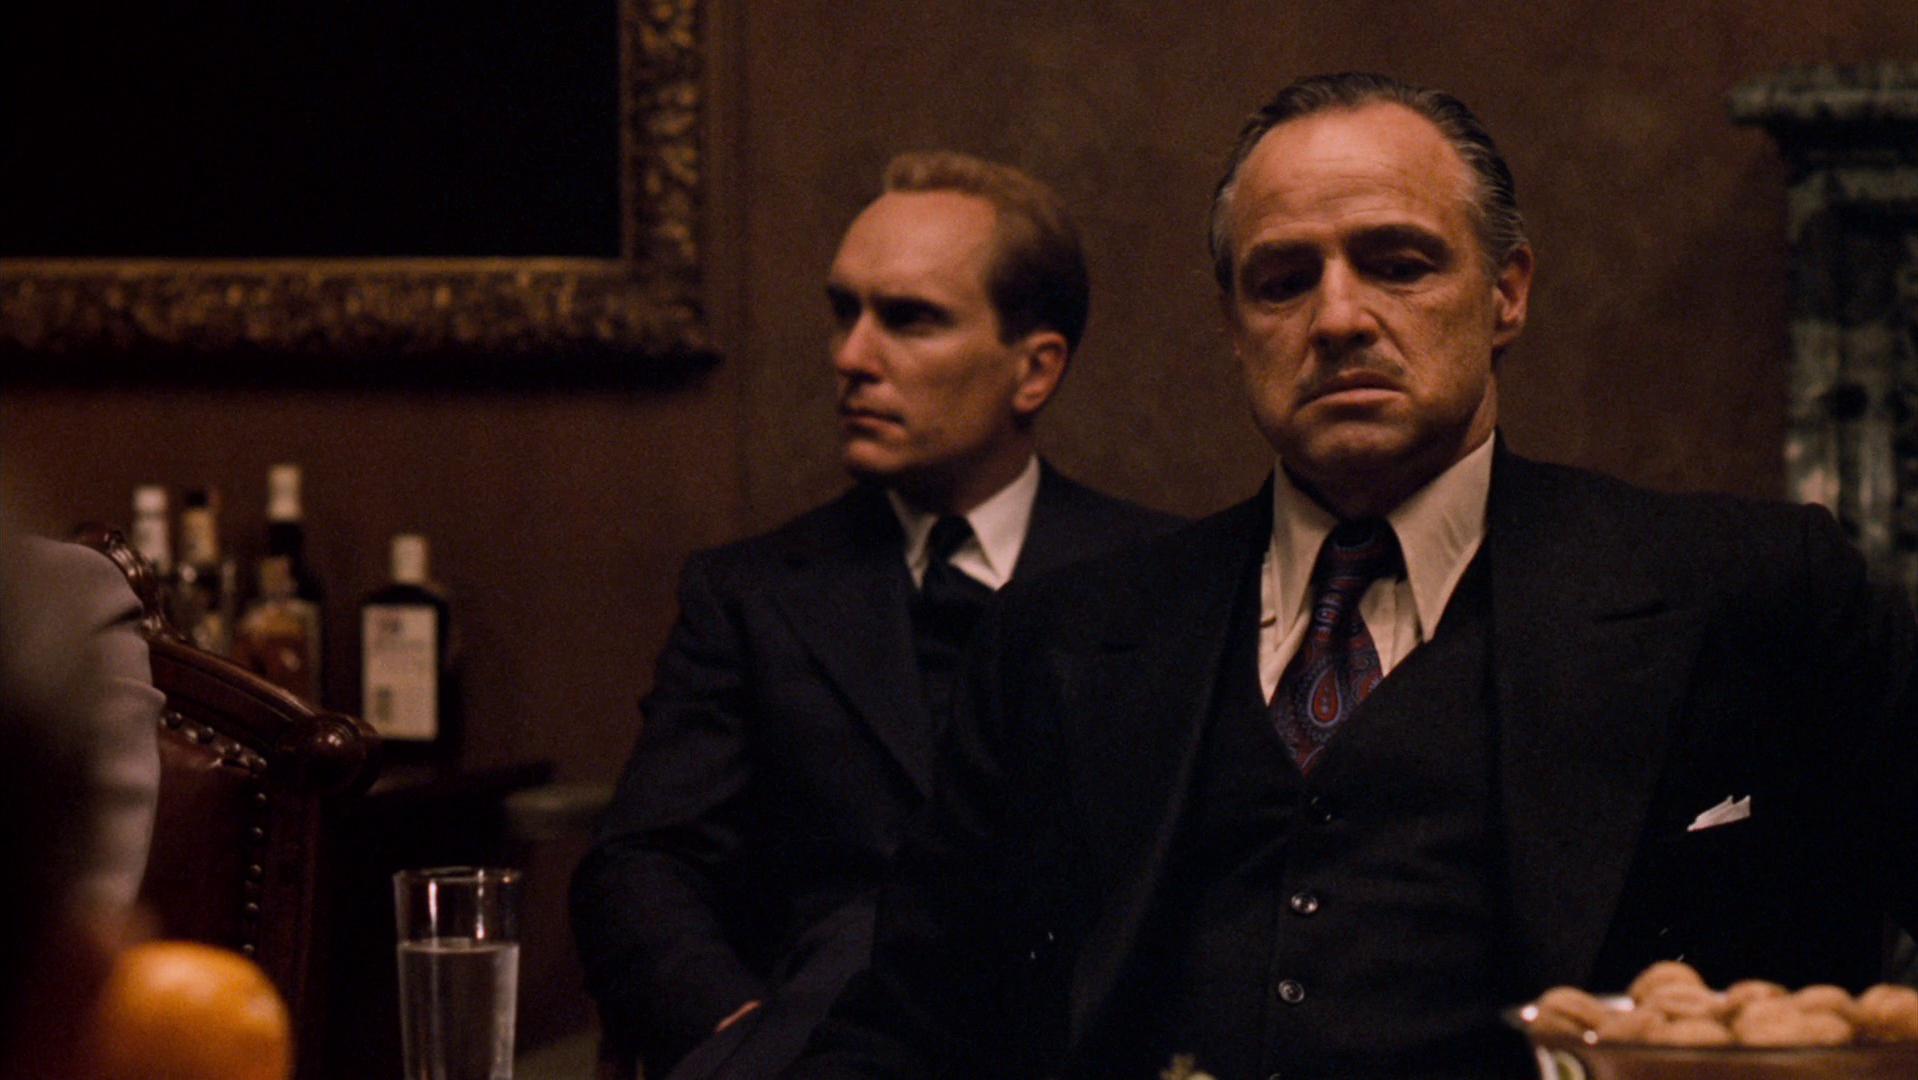 Robert Duvall and Marlon Brando in The Godfather